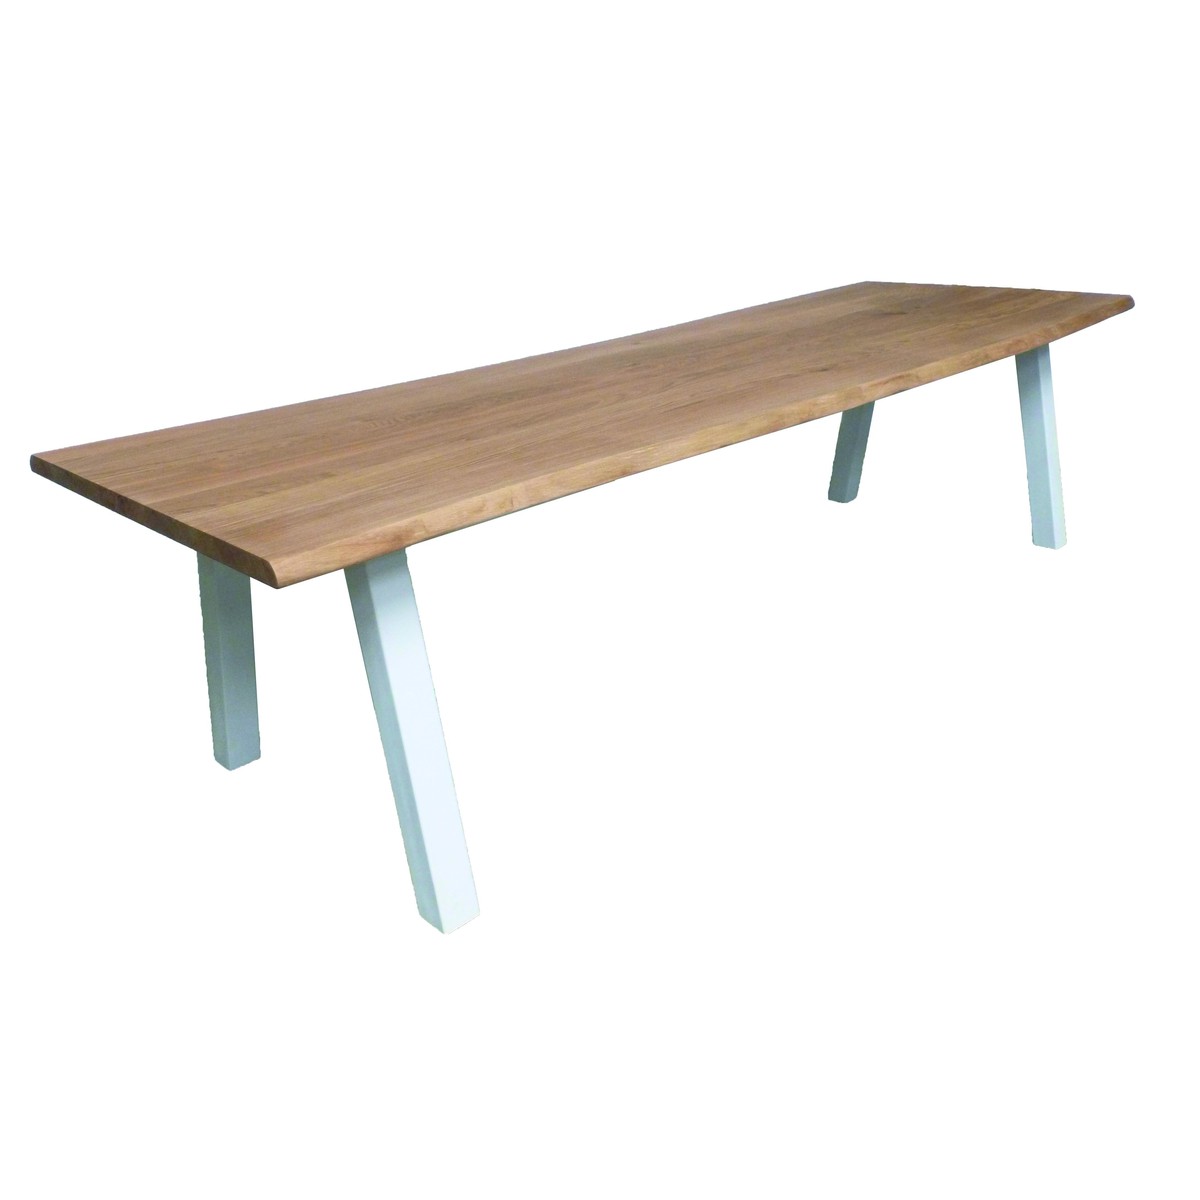   Table Arda Trunk rectangulaire  160x100x77cm